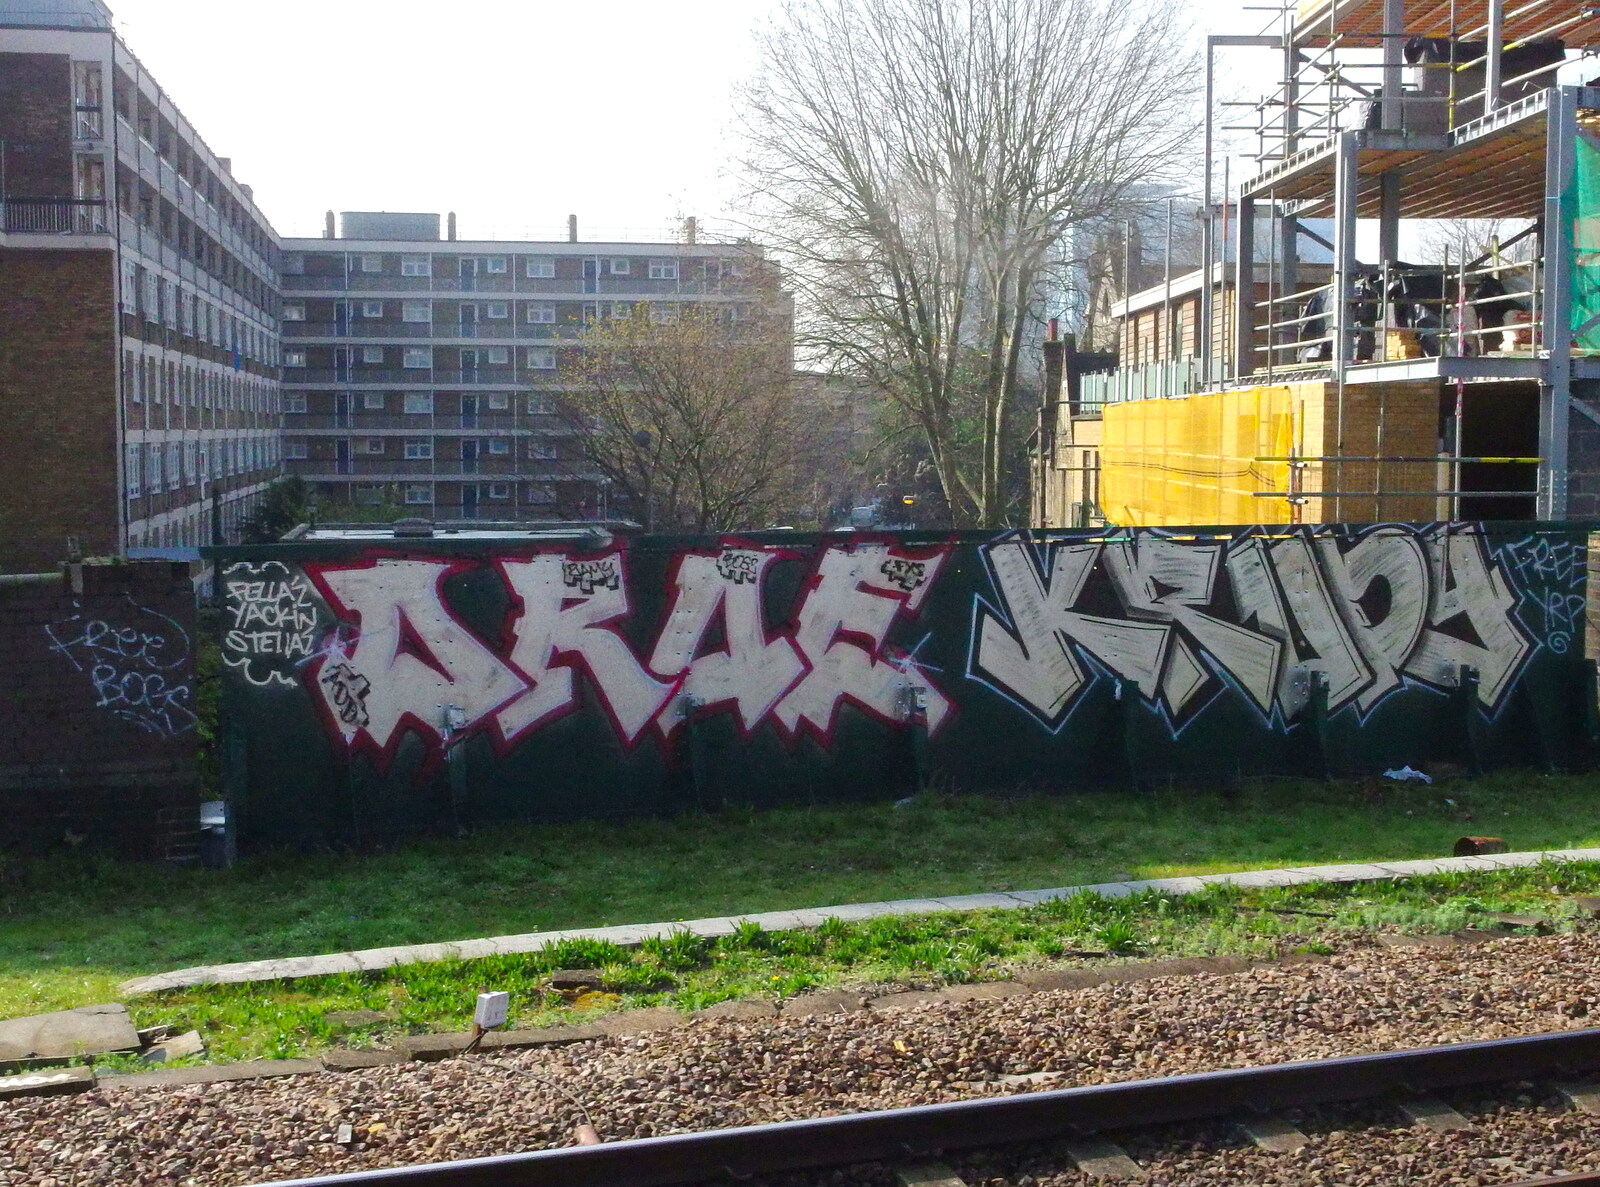 Graffiti on a railway bridge from A Trainey Sort of Week, Liverpool Street, City of London - 3rd April 2014